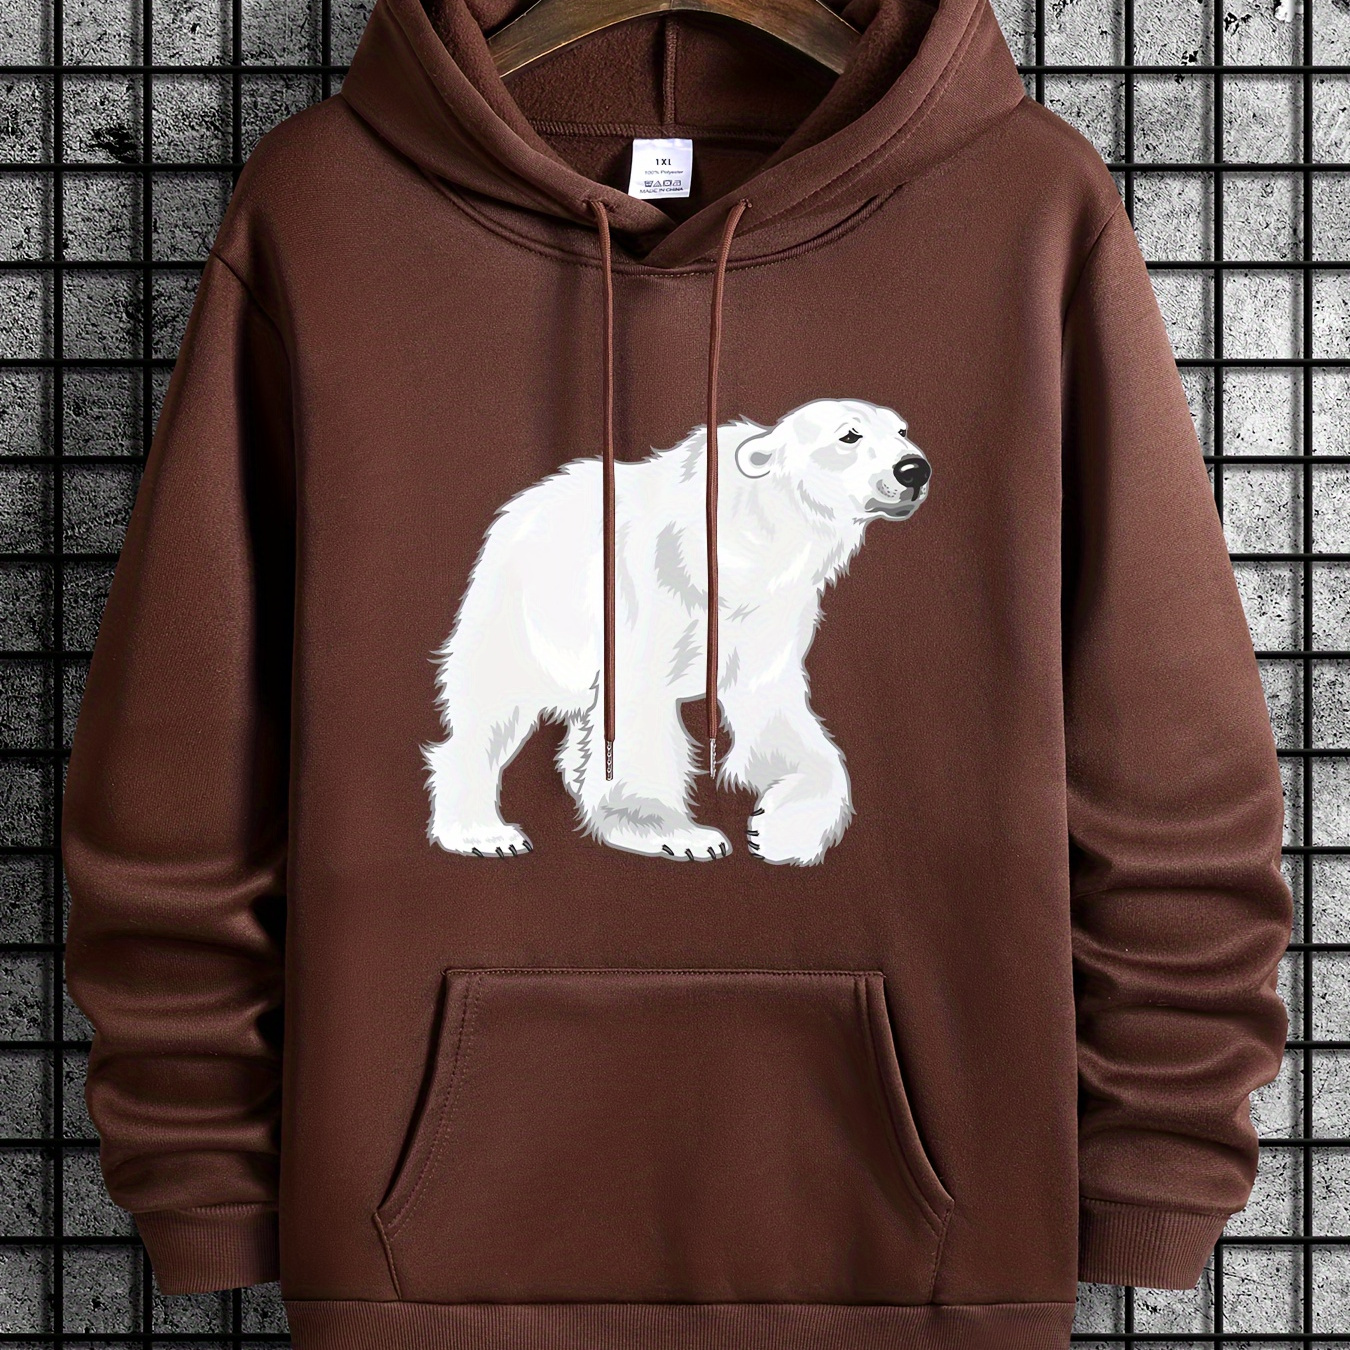 

Plus Size Men's Hooded Sweatshirt, Anime Polar Bear Graphic Print Hoodies For Spring Fall Winter, Men's Clothing